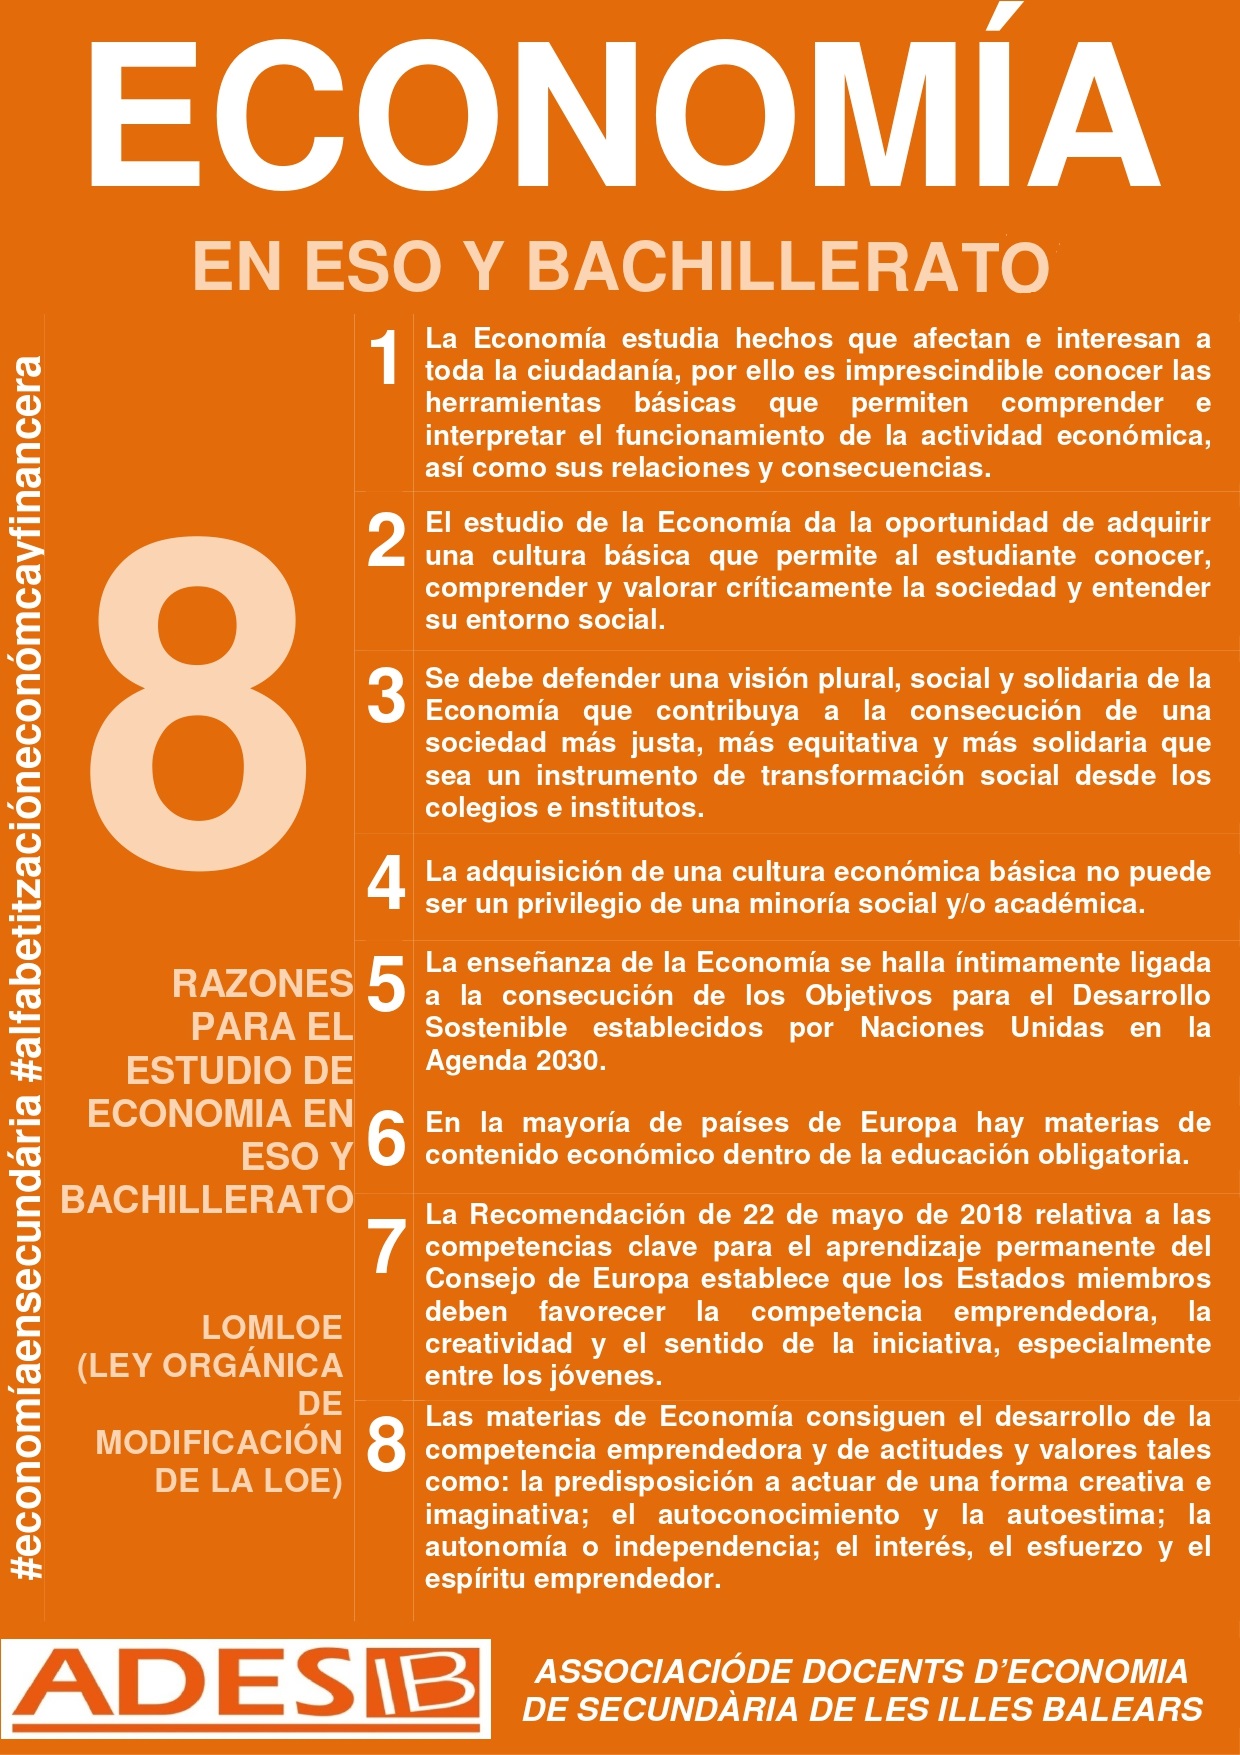 8 razones castellano 2 page 0001 1